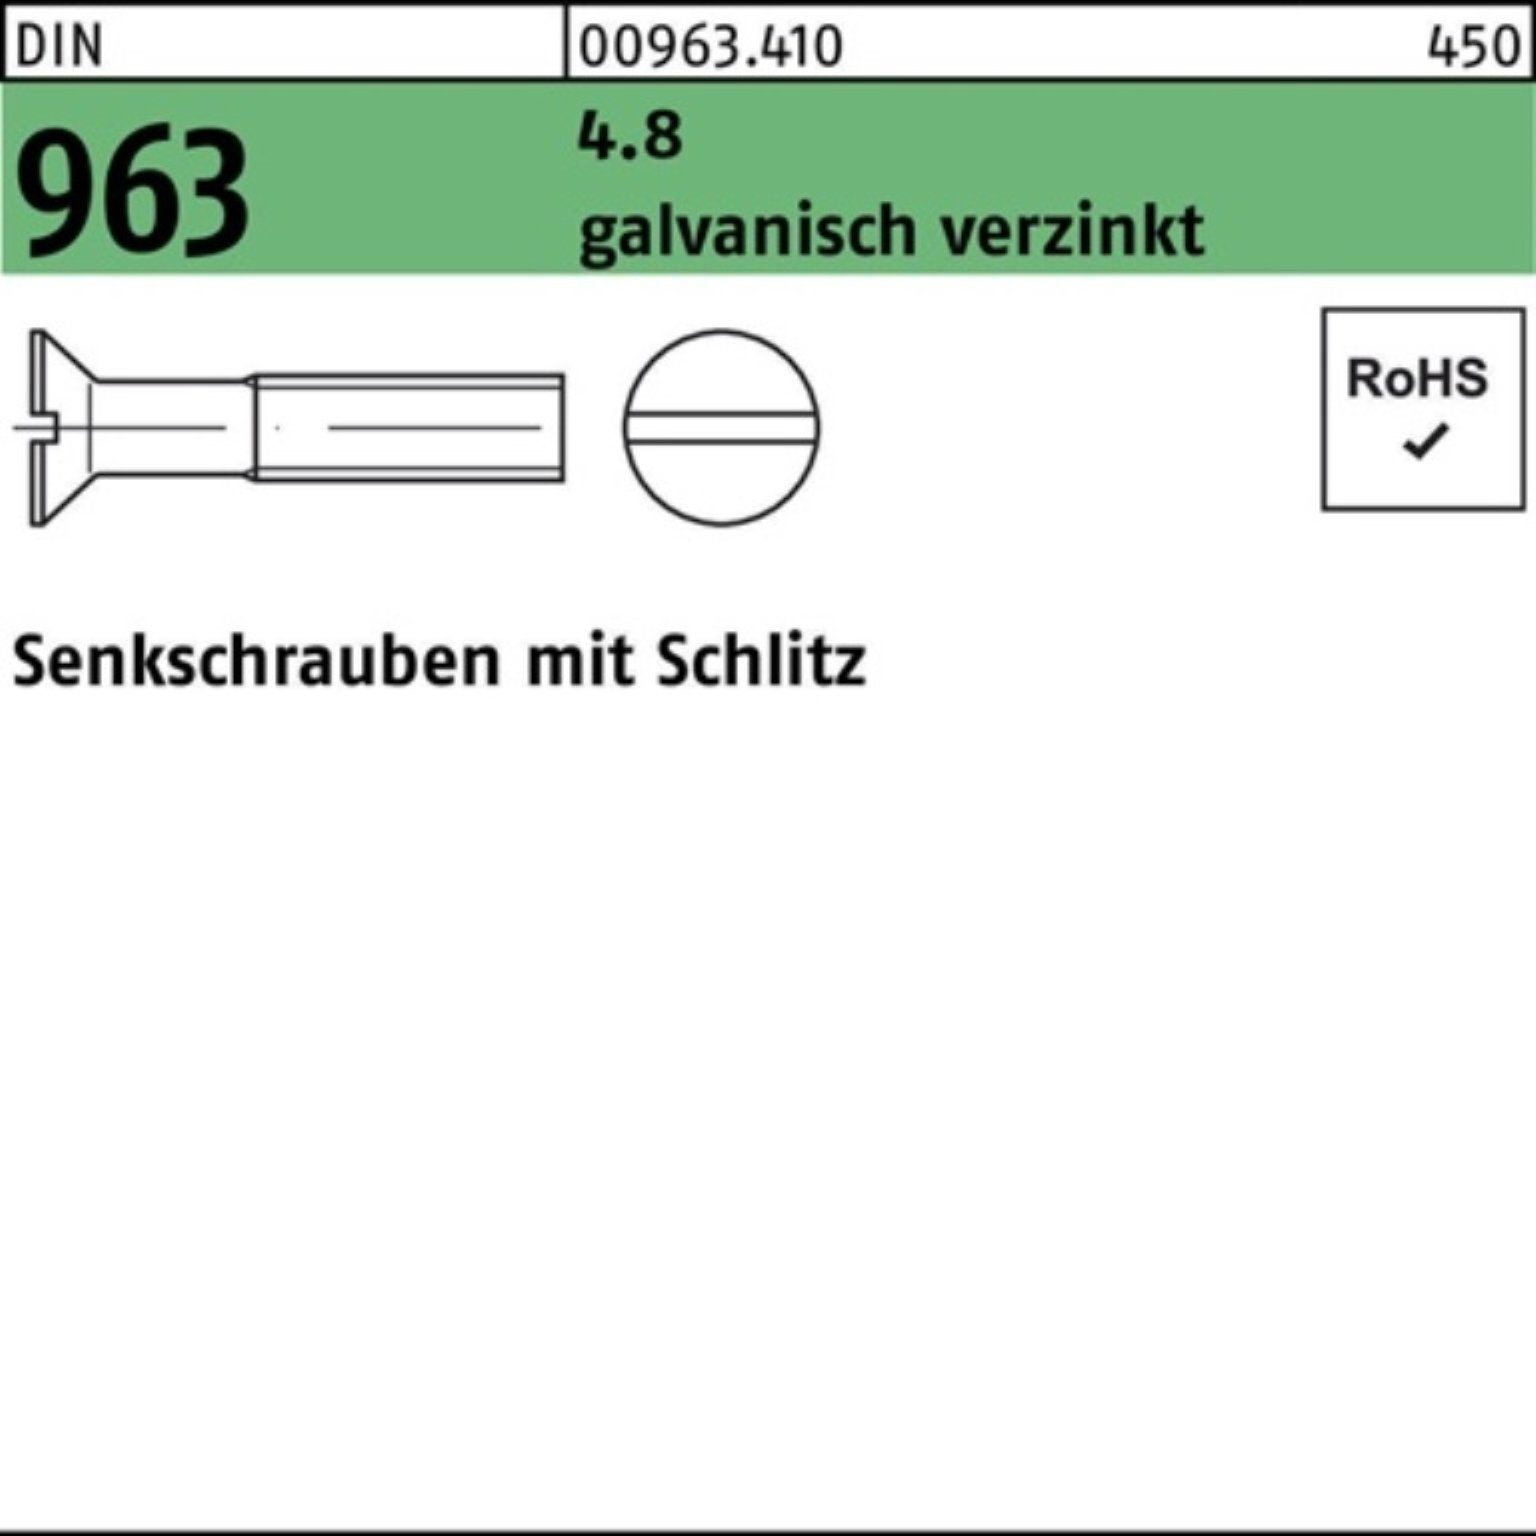 galv.verz. Stü DIN 200 200er Pack M5x Reyher Senkschraube Schlitz Senkschraube 4.8 963 18